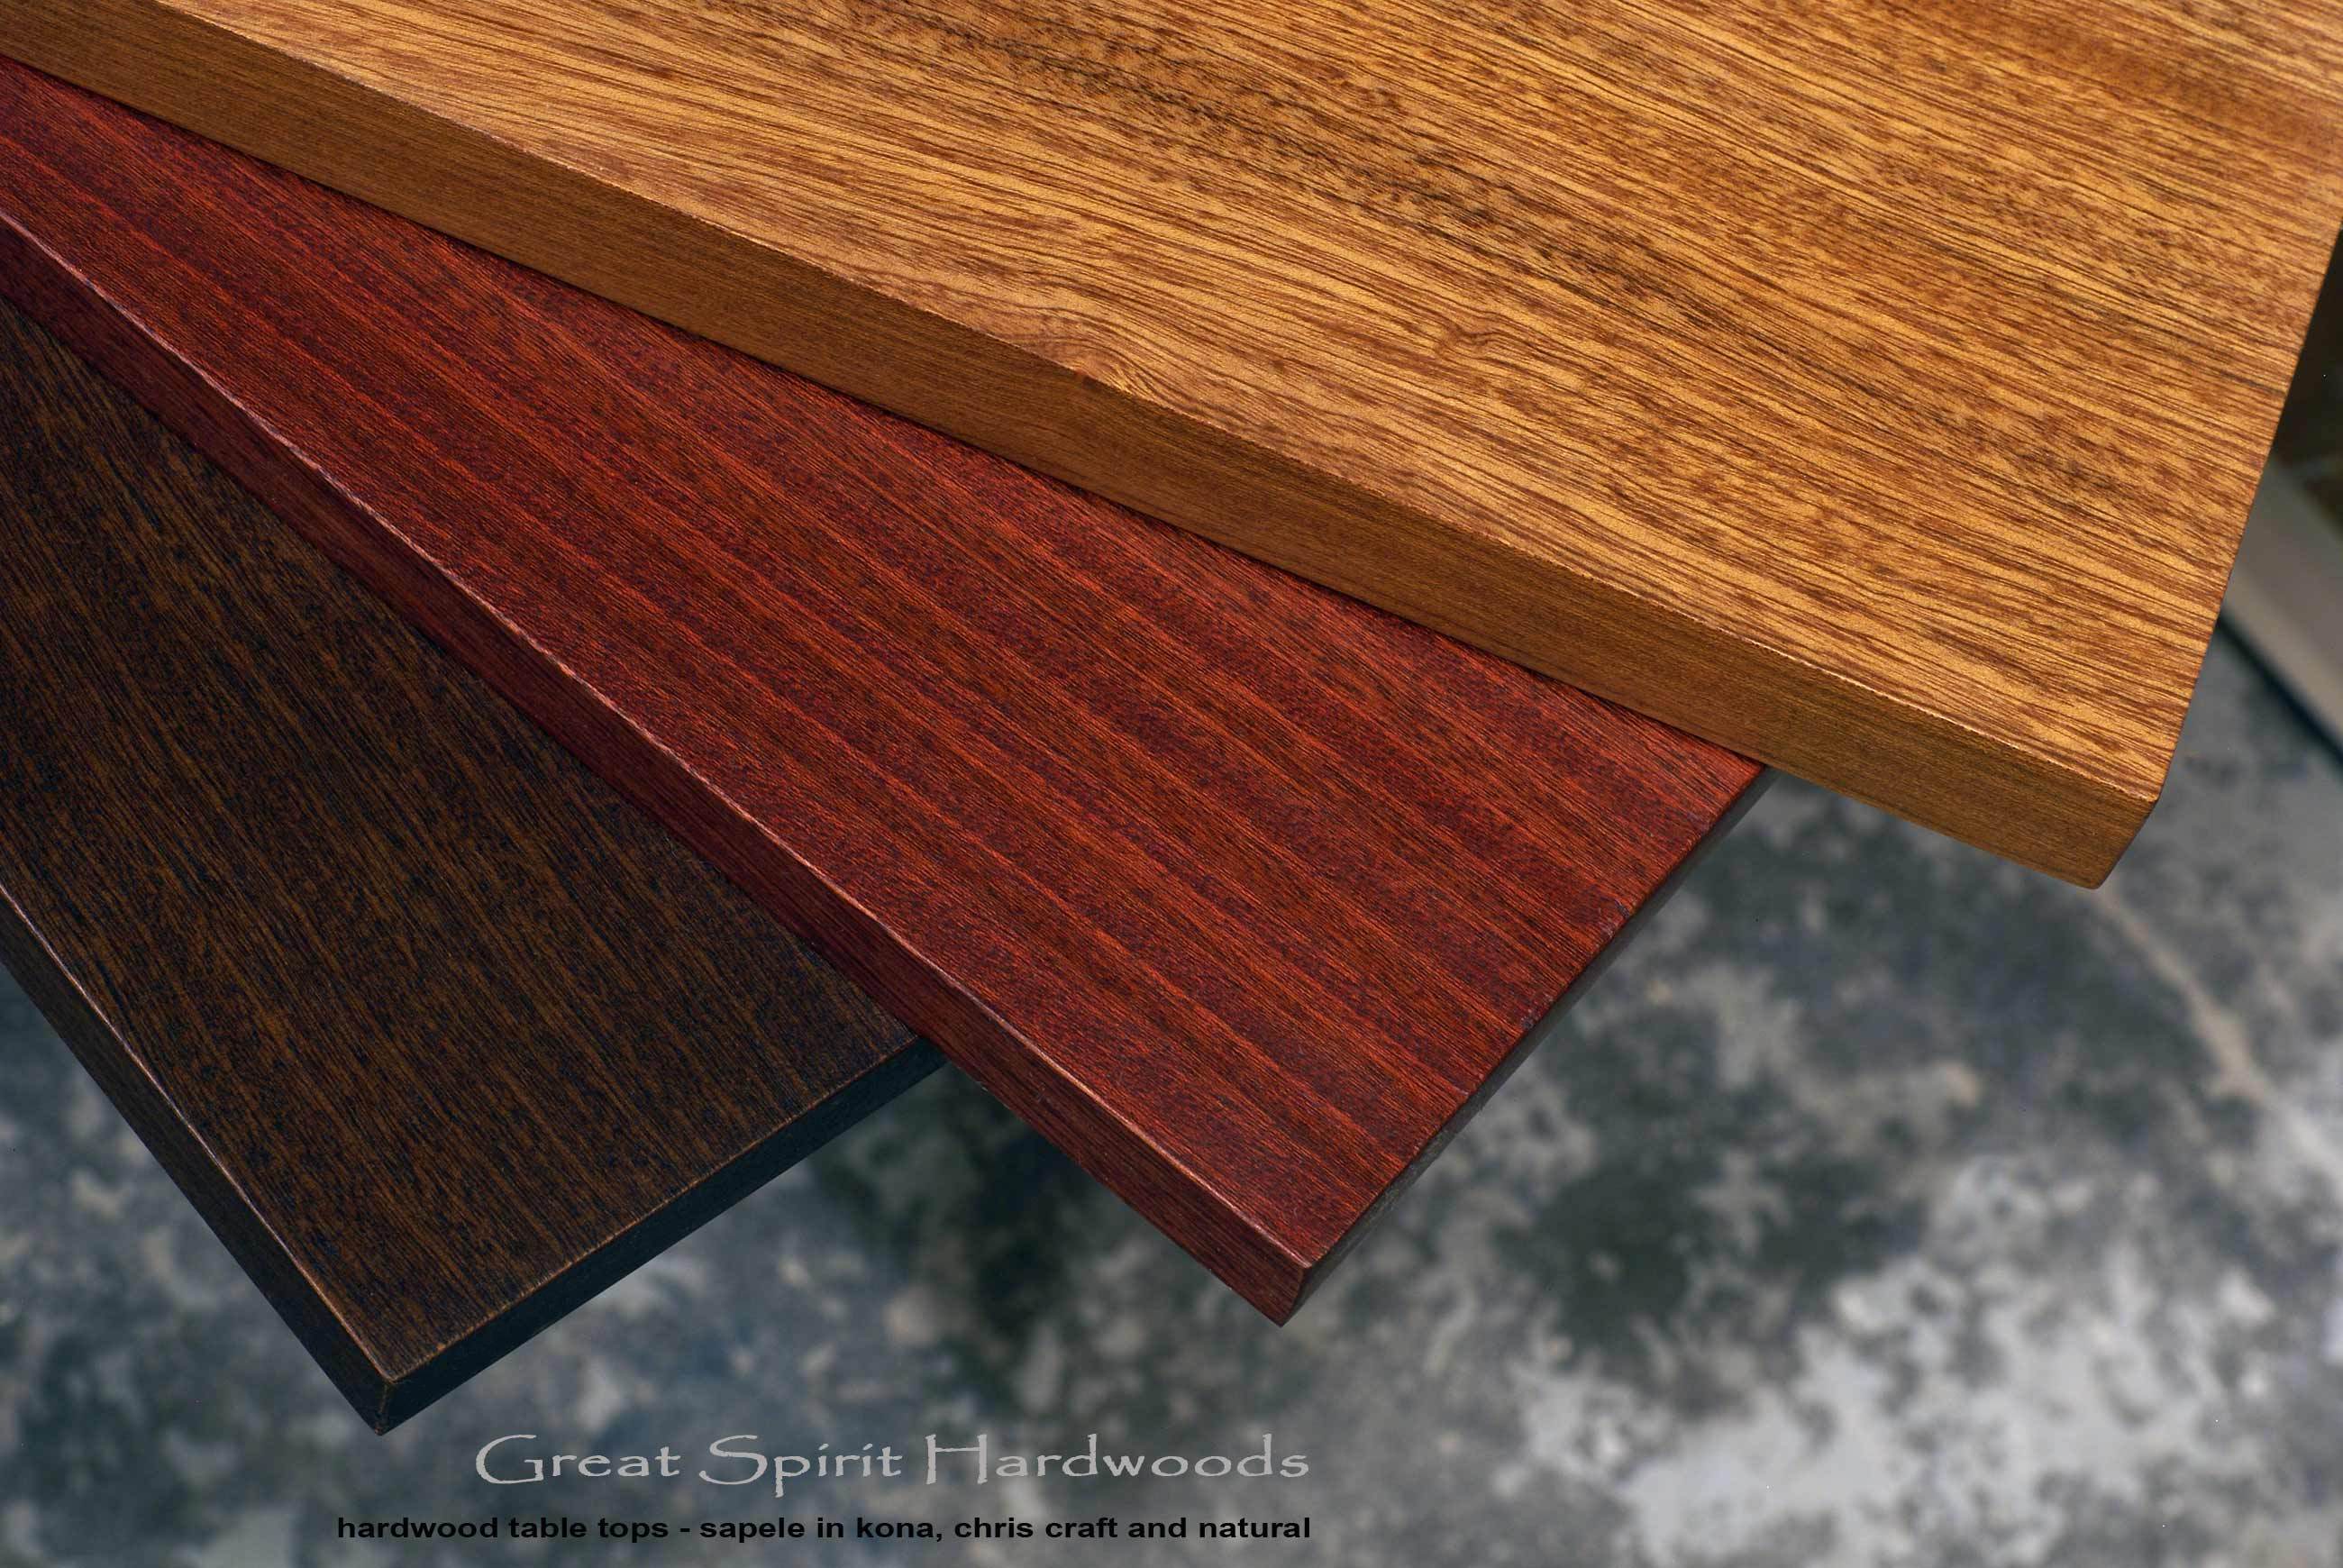 https://spiritcraftfurniture.com/img/table-tops/custom-made-solid-hardwood-table-tops-in-sapele-from-great-spirit-hardwoods-east-dundee-illinois.jpg